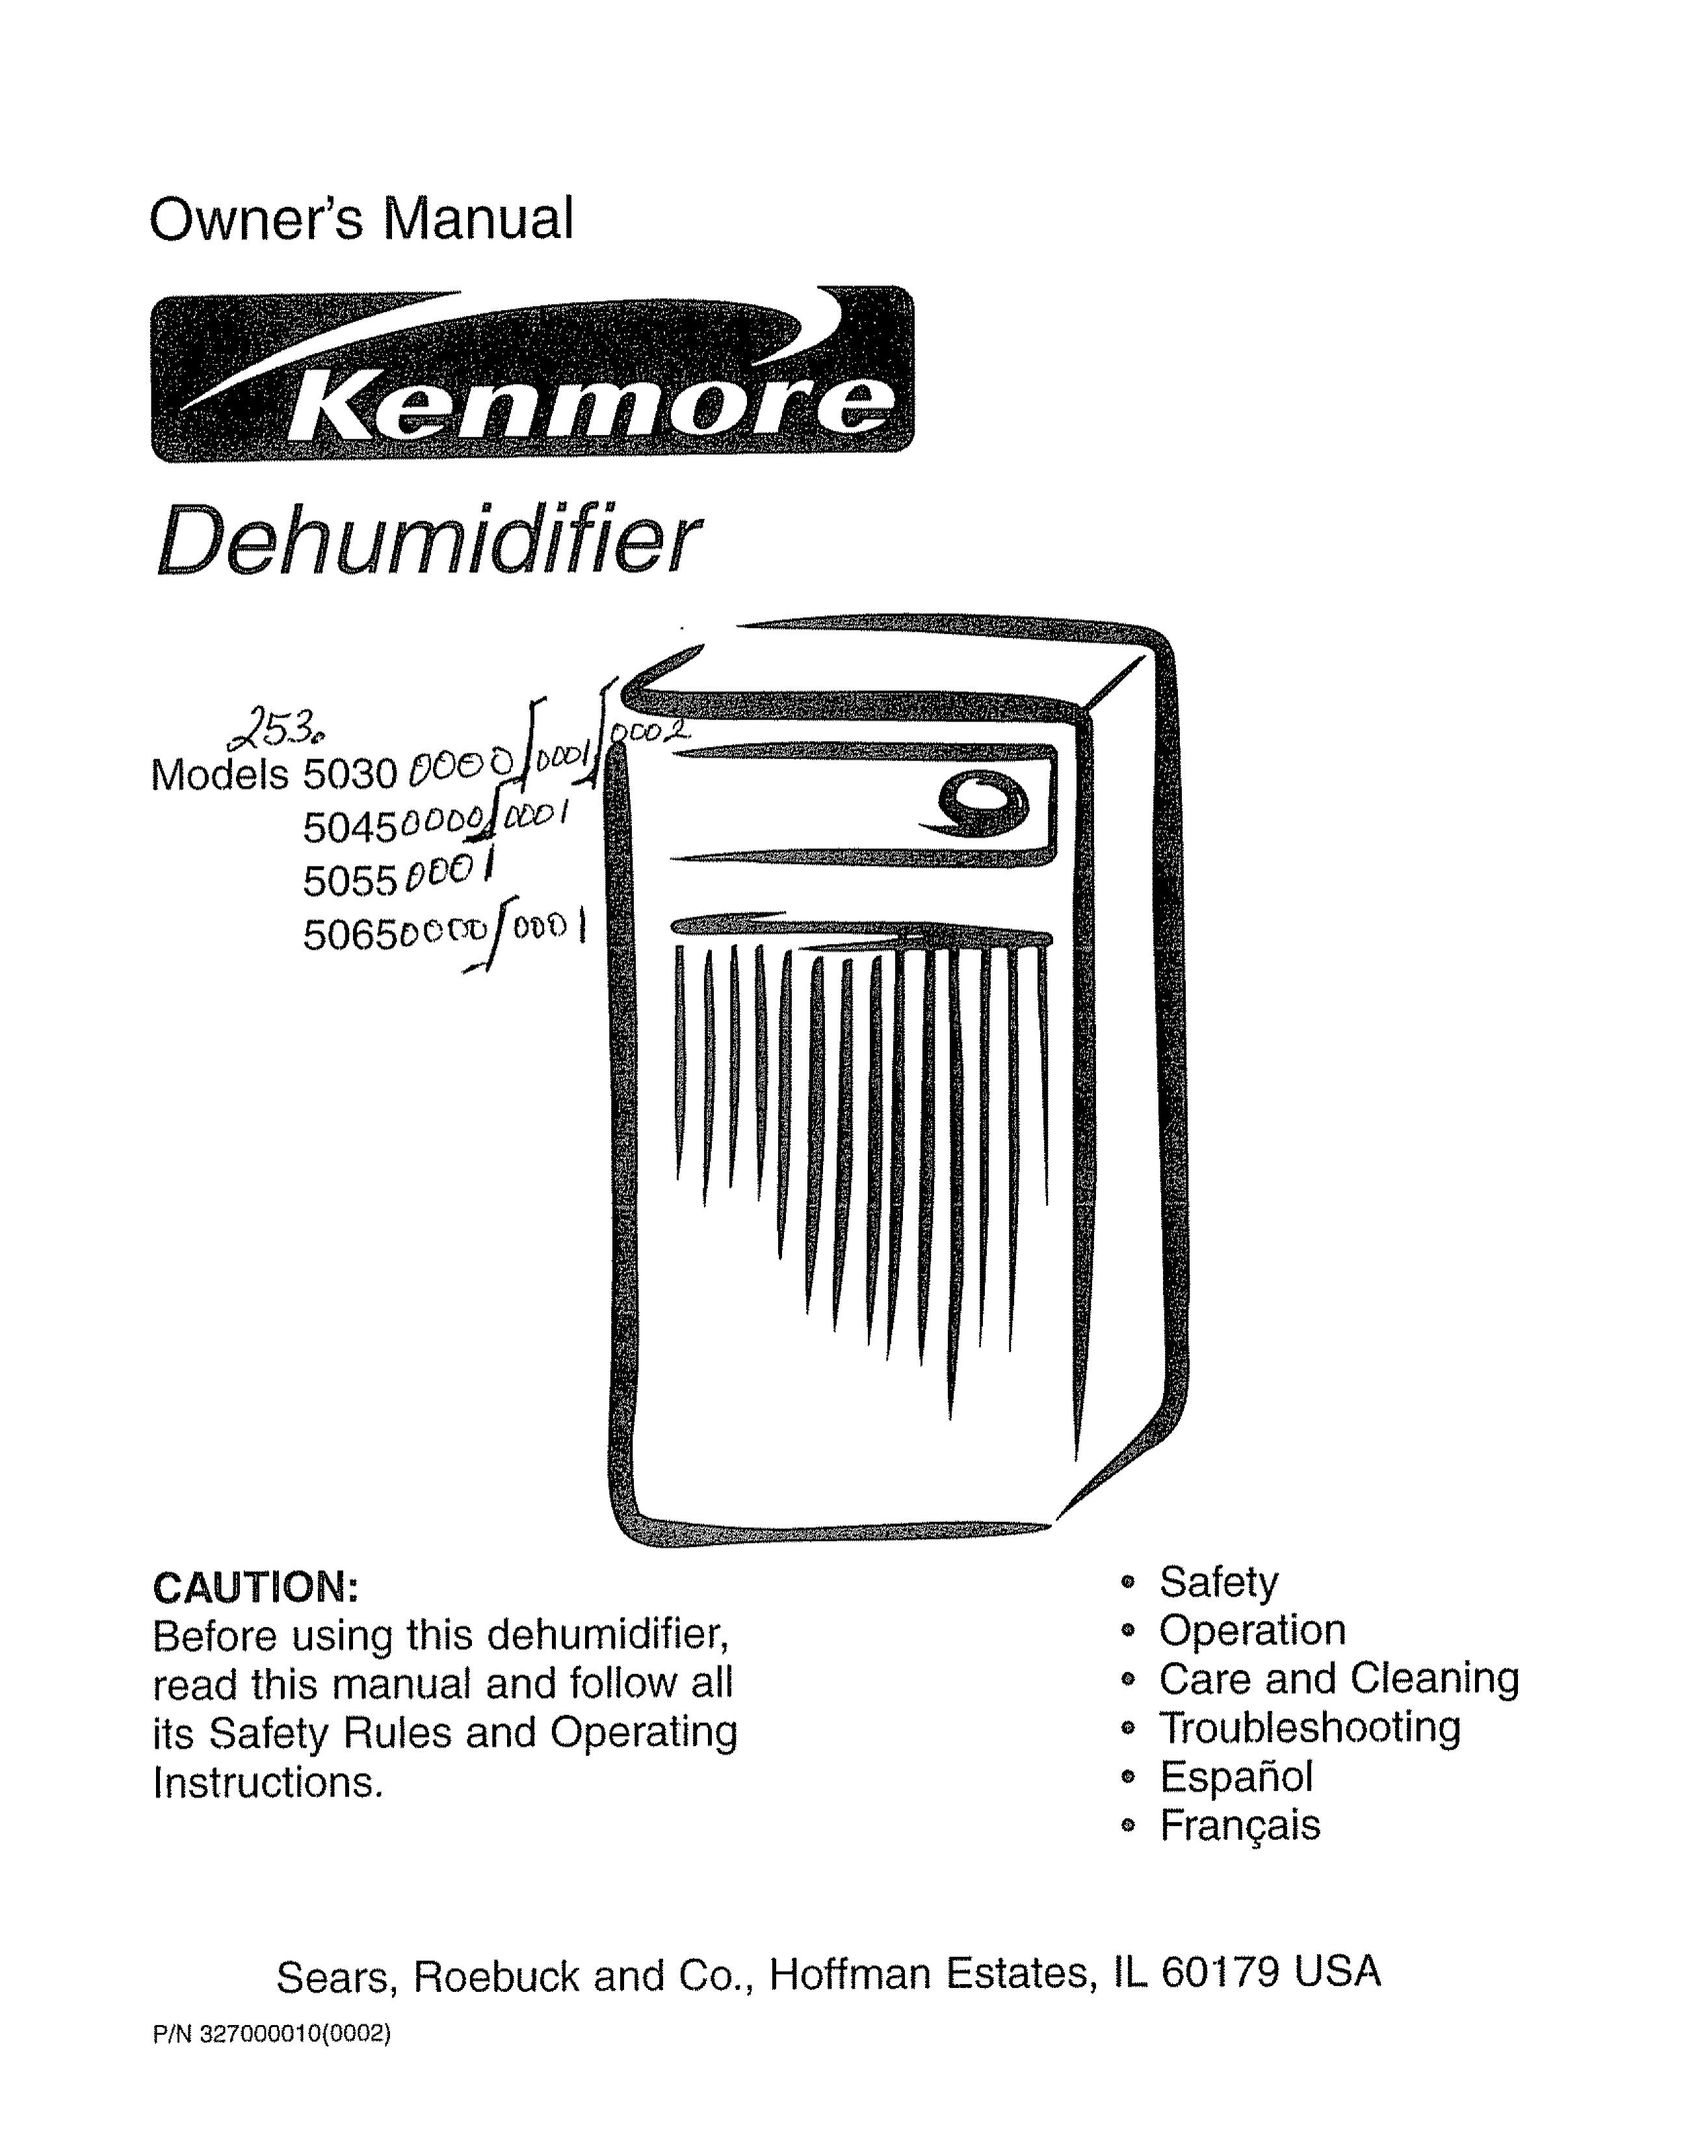 Kenmore 5045 Dehumidifier User Manual